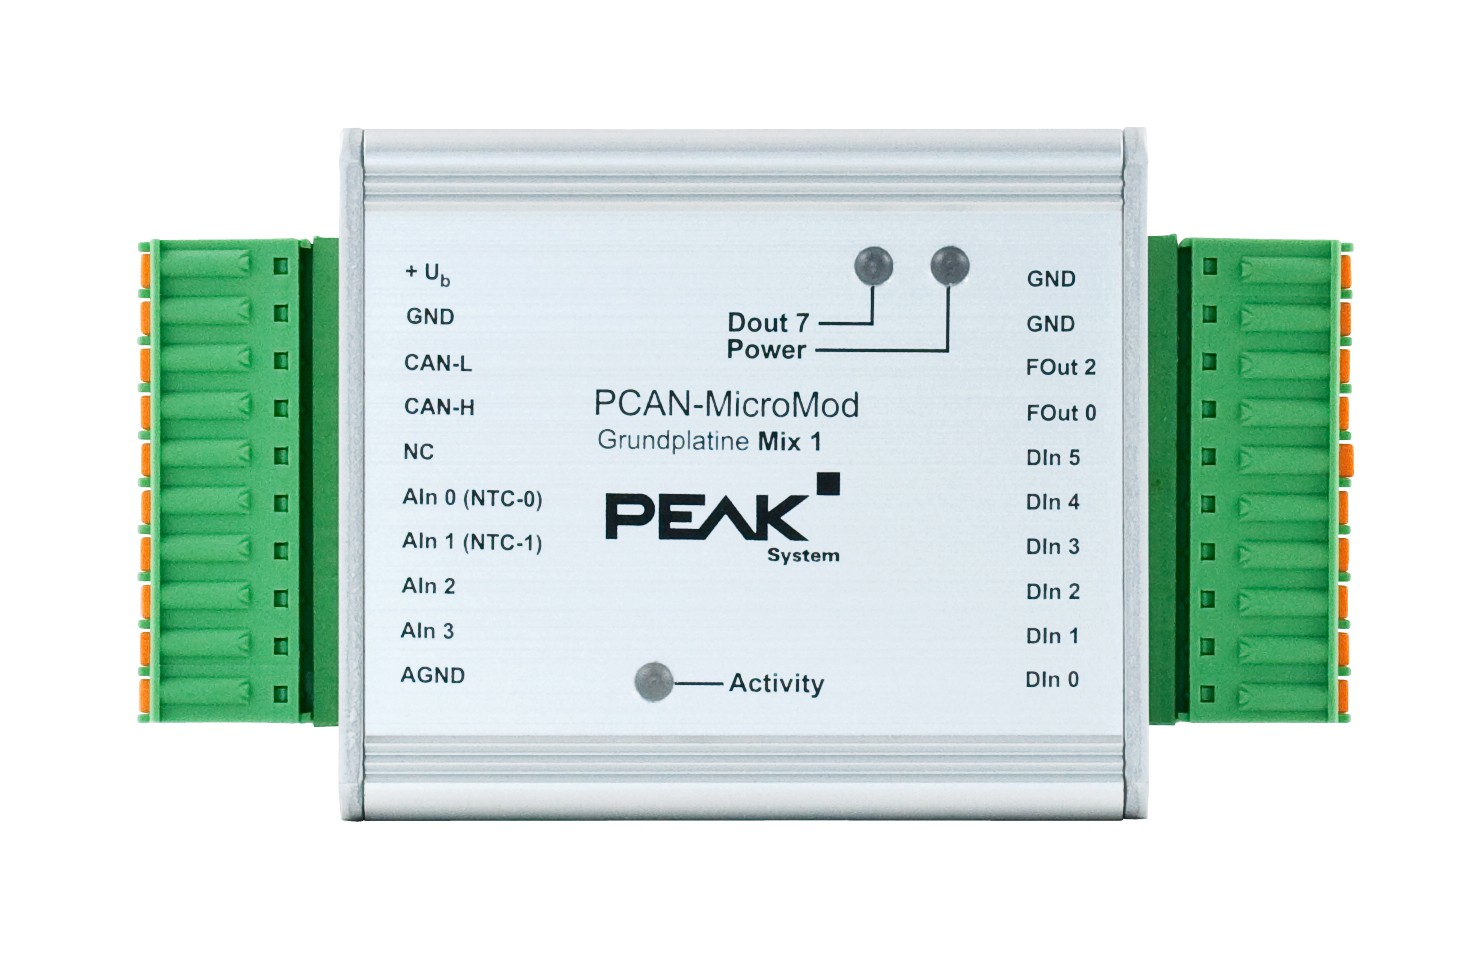 PCAN-MicroMod Modulo base Mix 1